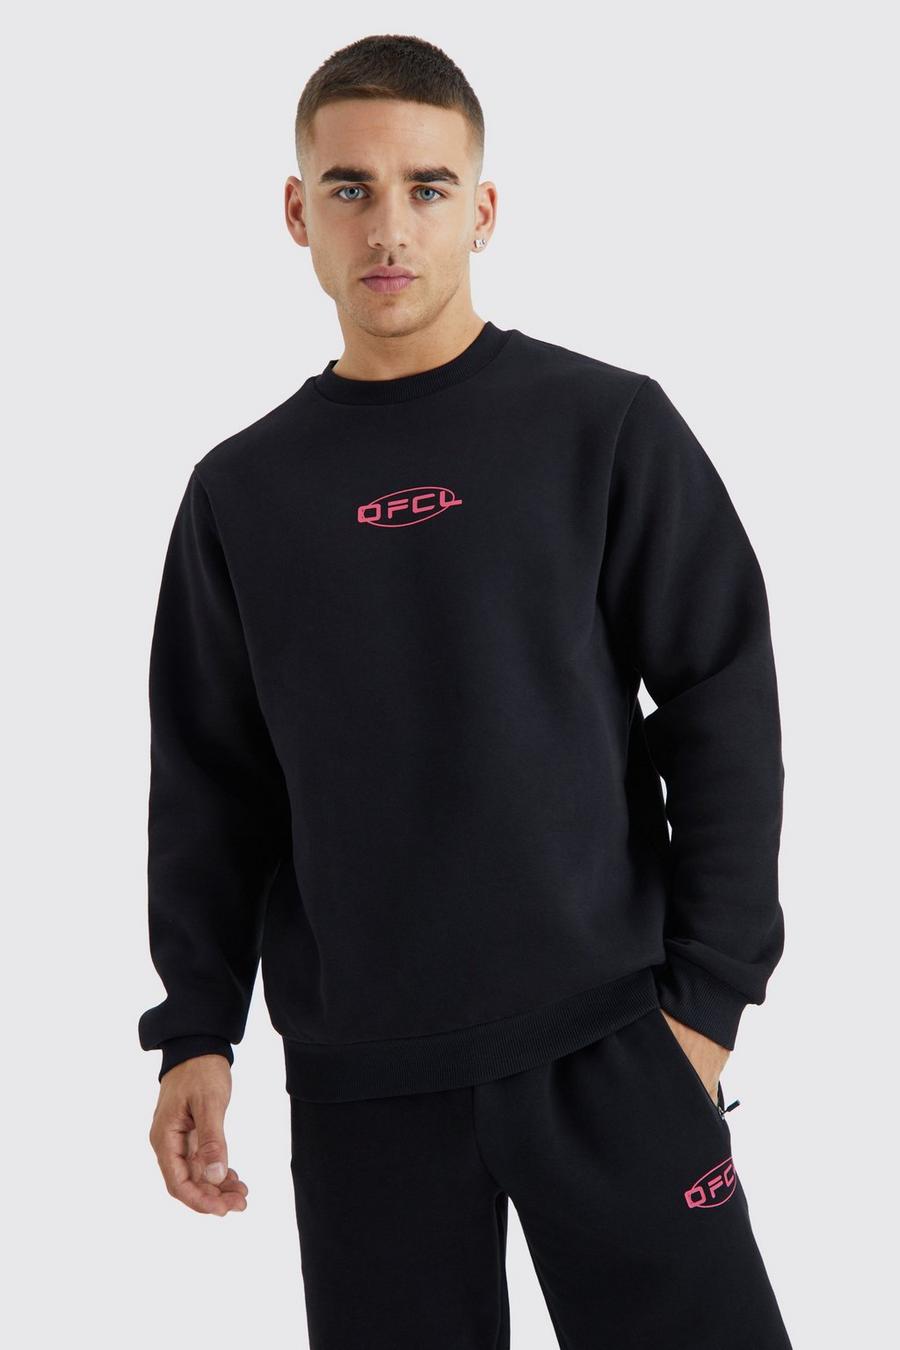 Black Basic Ofcl Crew Neck Sweatshirt